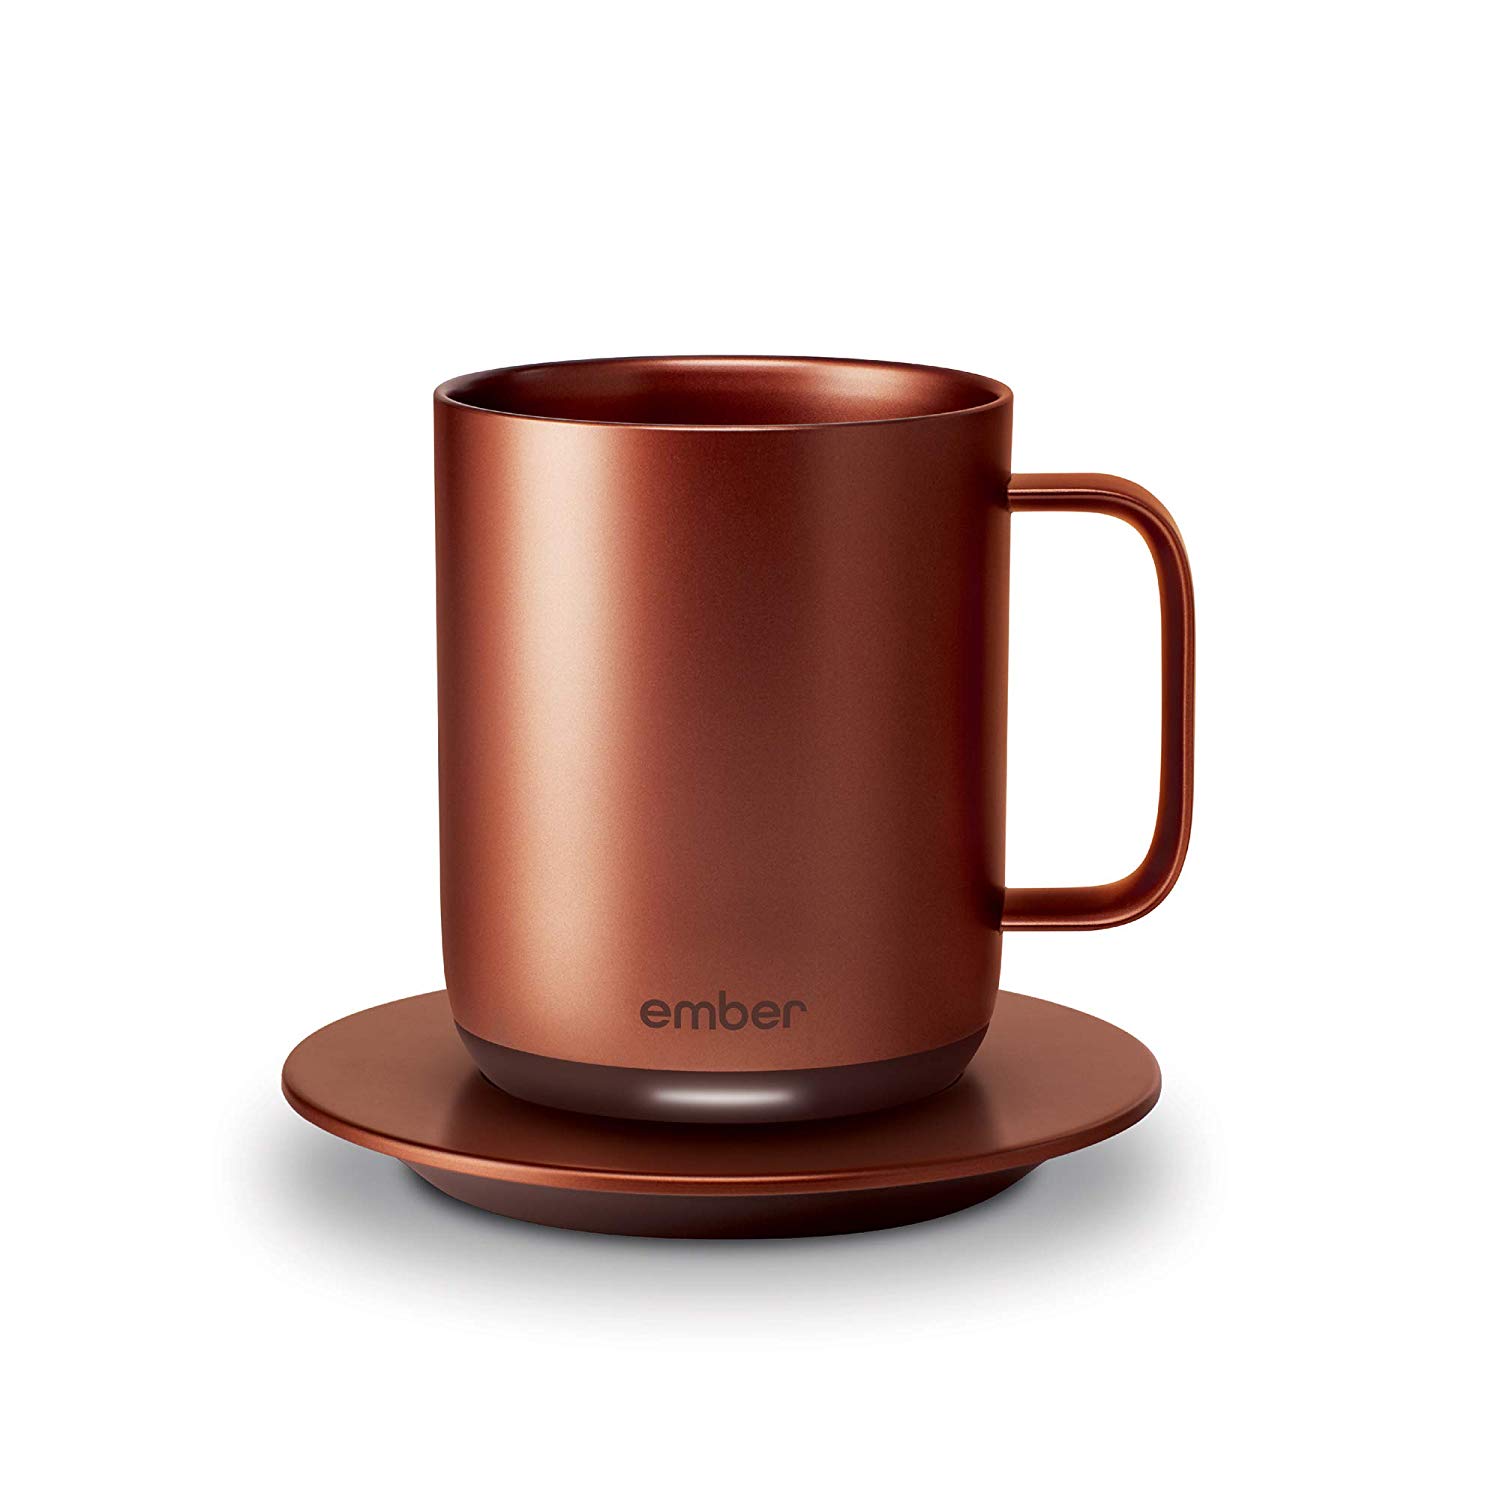 http://christopherthescholiast.com/wp-content/uploads/2019/11/ember-temperature-controlled-heated-smart-mug.jpg